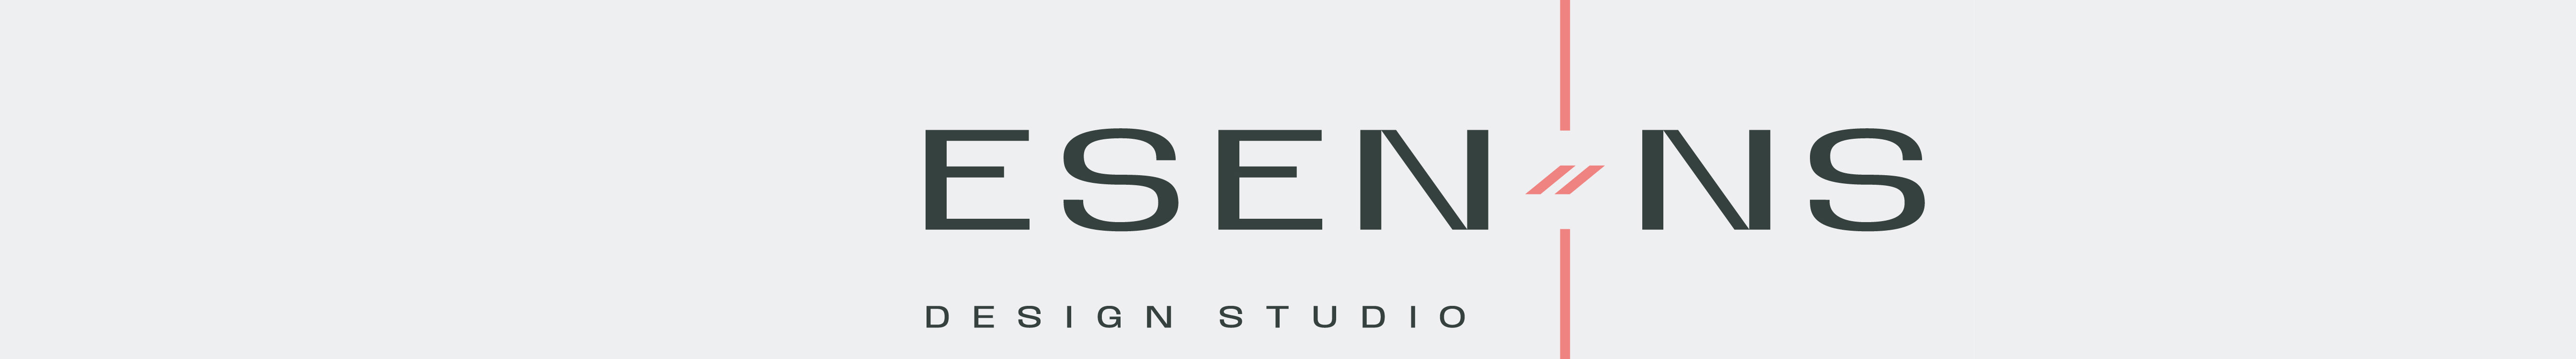 Baner profilu użytkownika ESENINS design studio